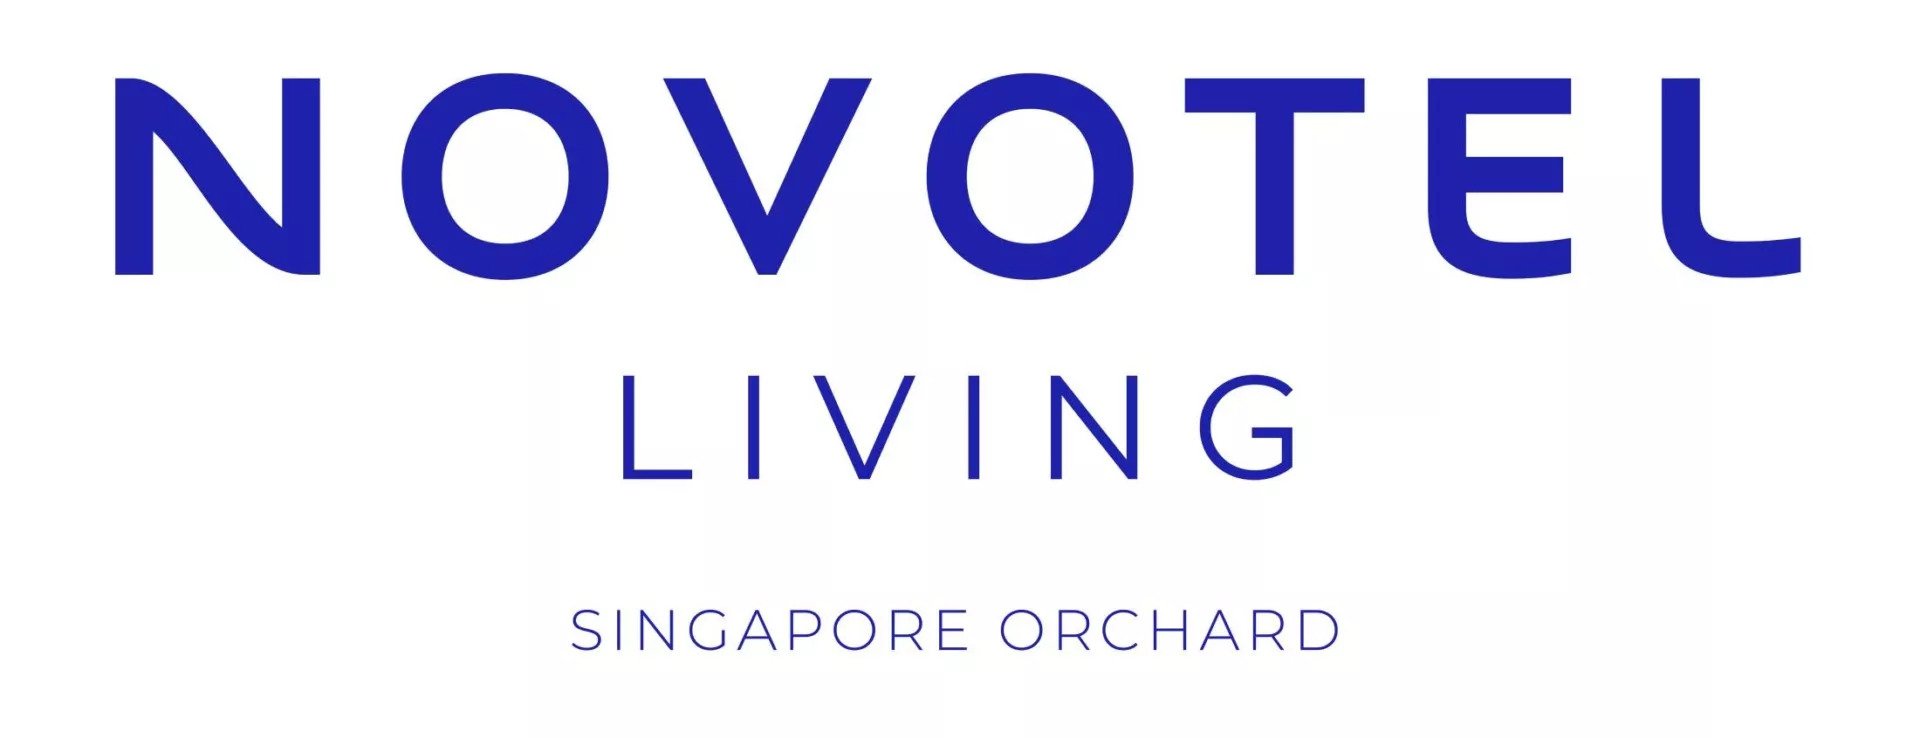 Novotel Living Singapore Orchard